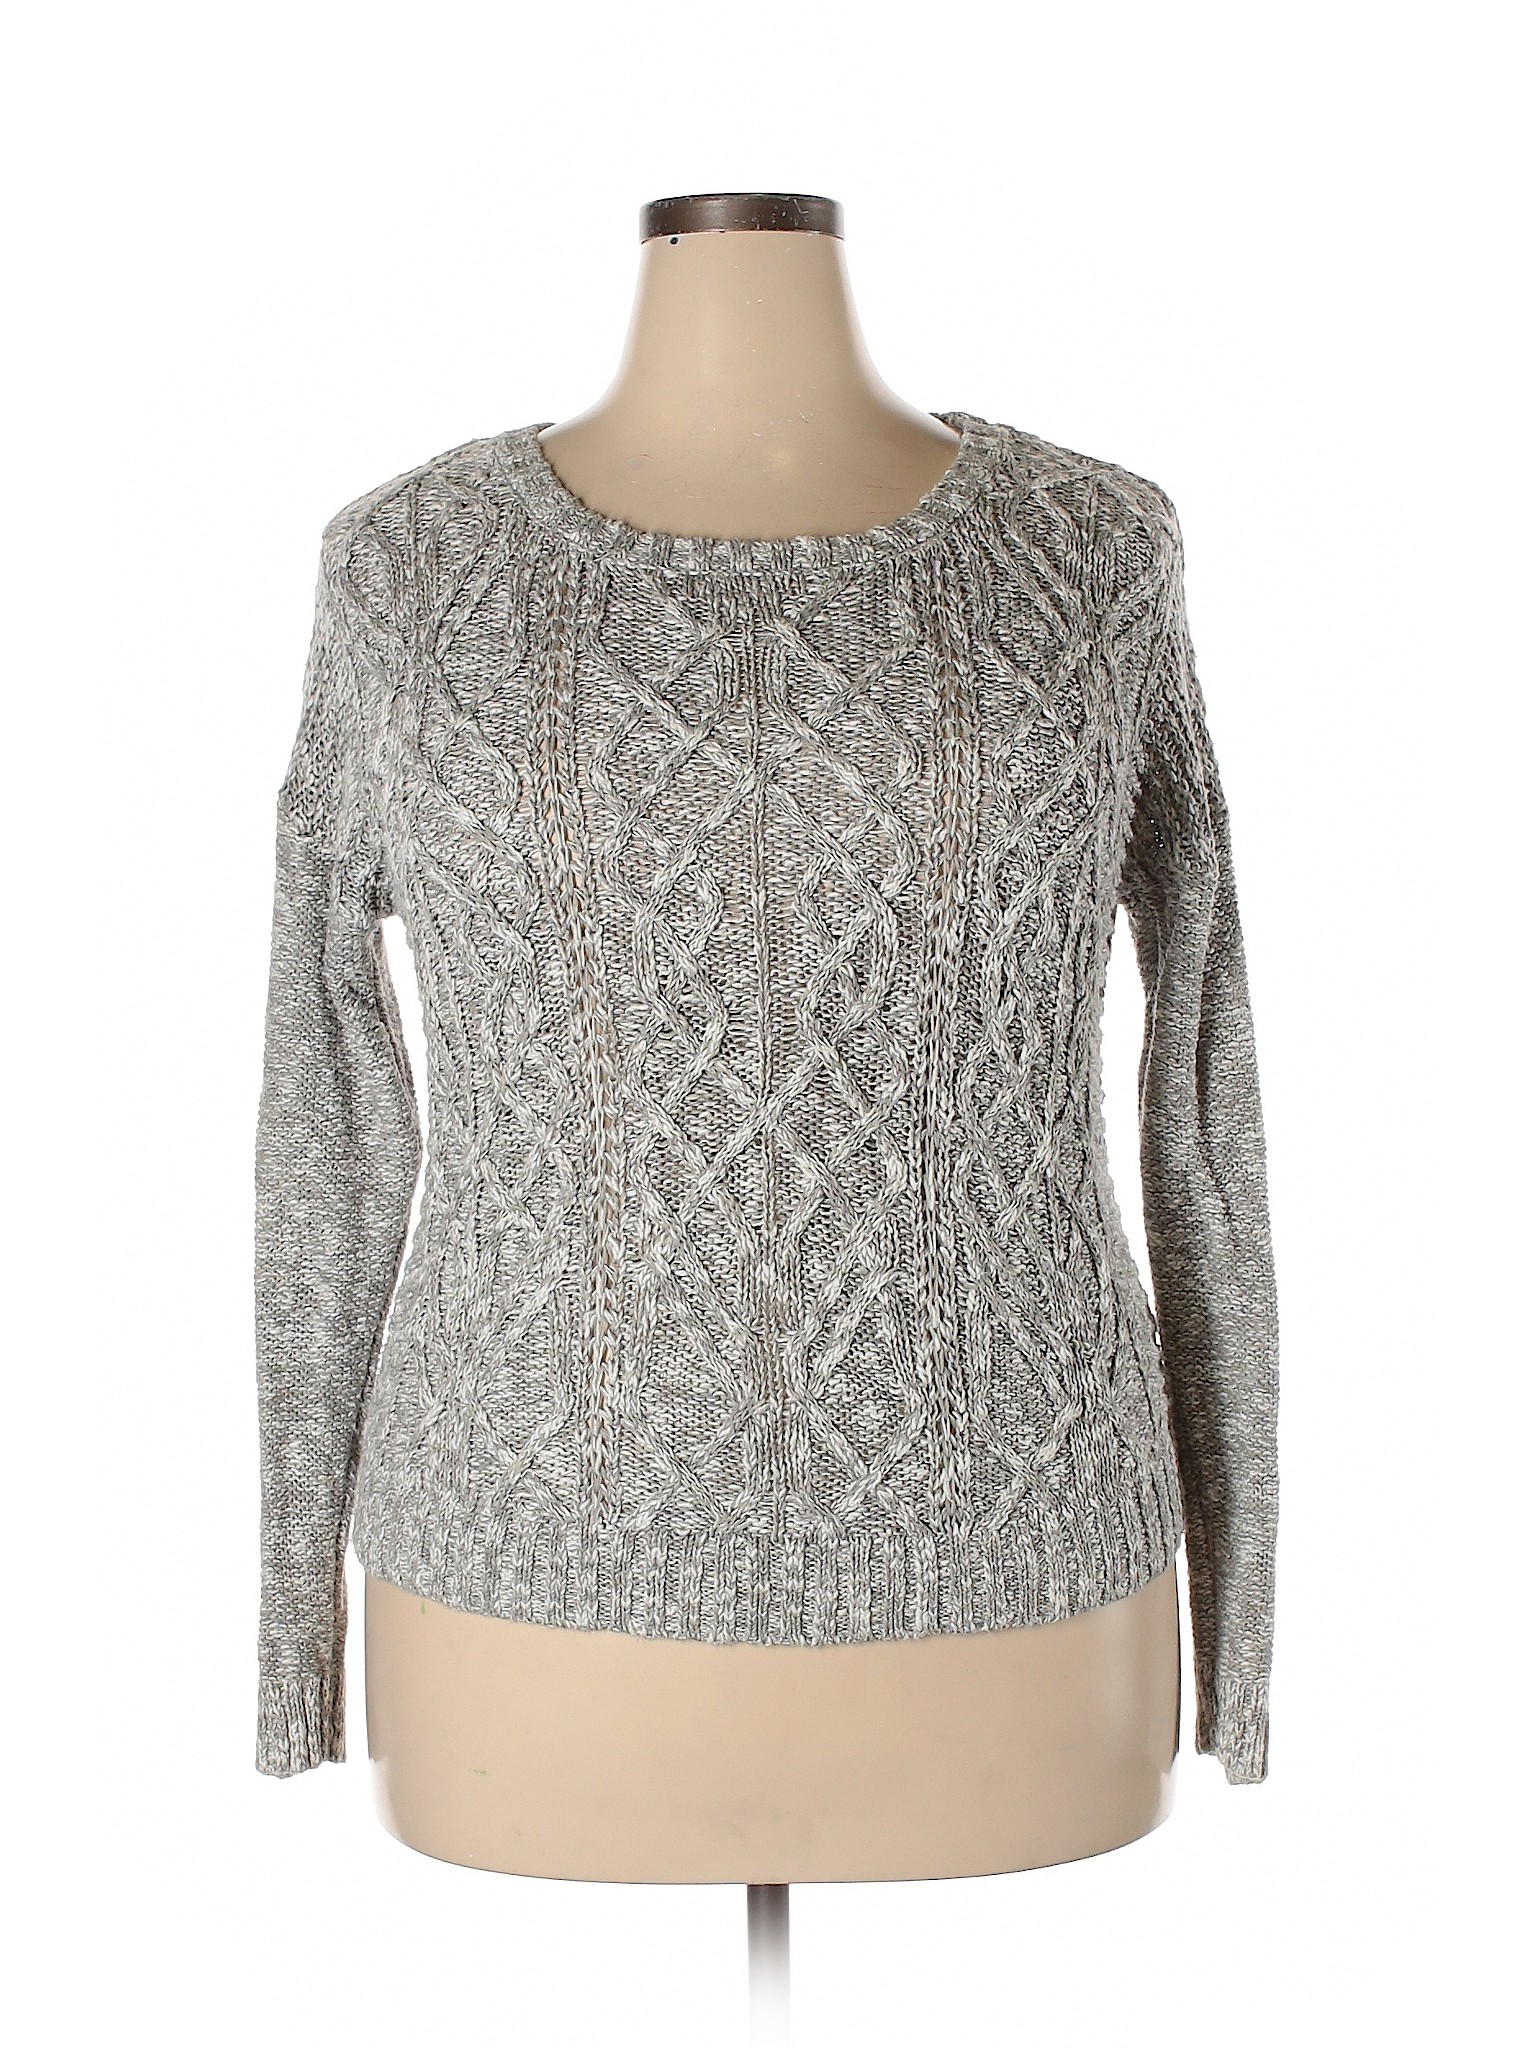 Mossimo Supply Co. Women Gray Pullover Sweater XXL | eBay